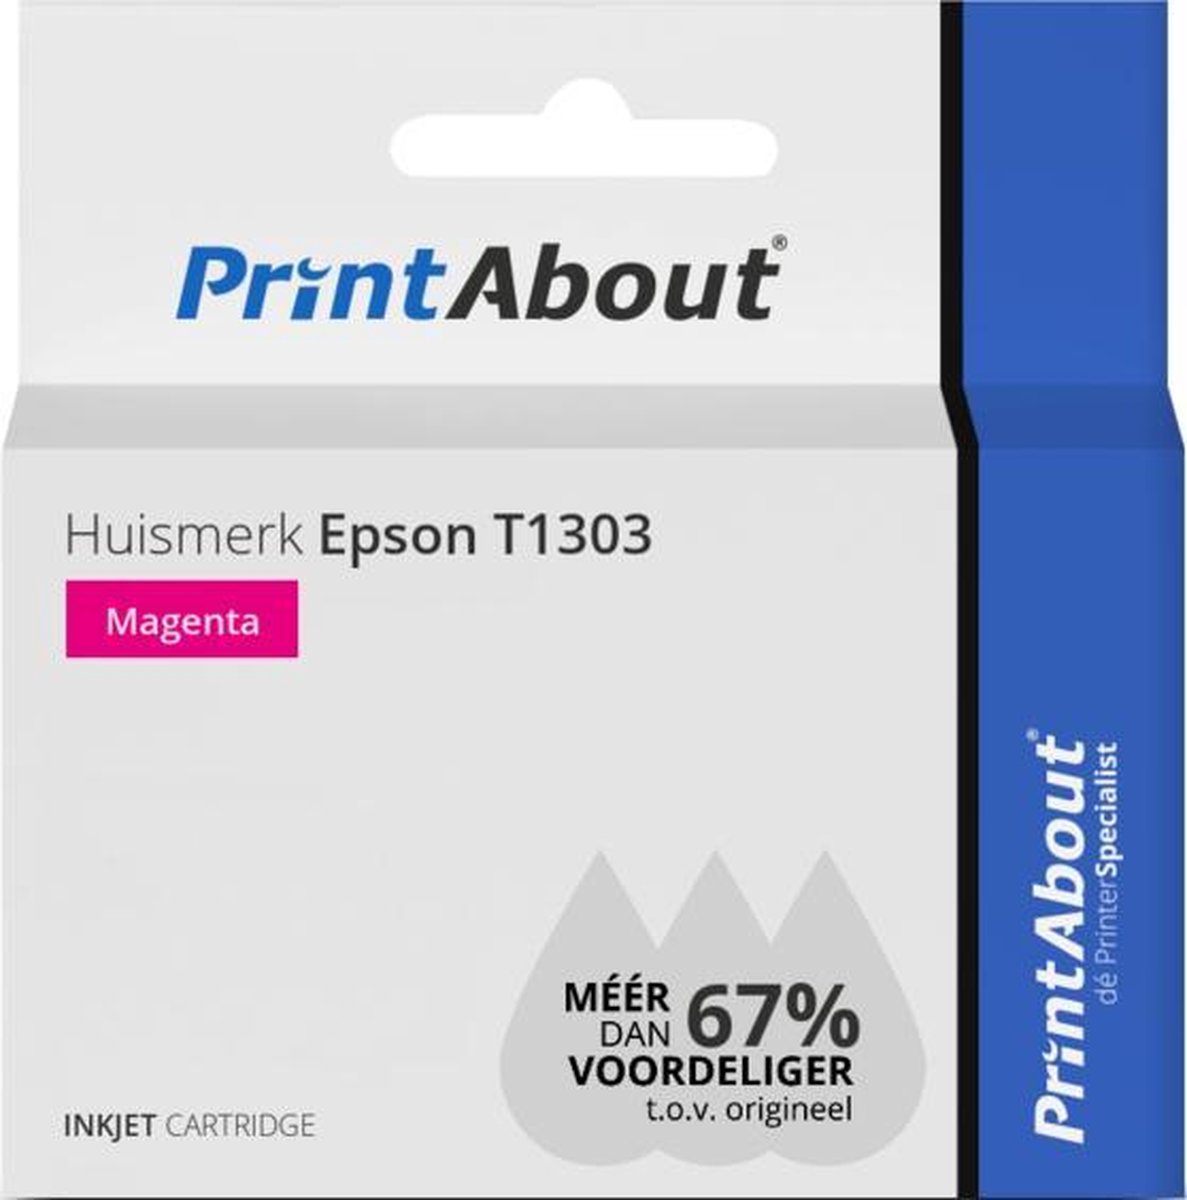 PrintAbout Huismerk Epson T1303 Inktcartridge - Magenta